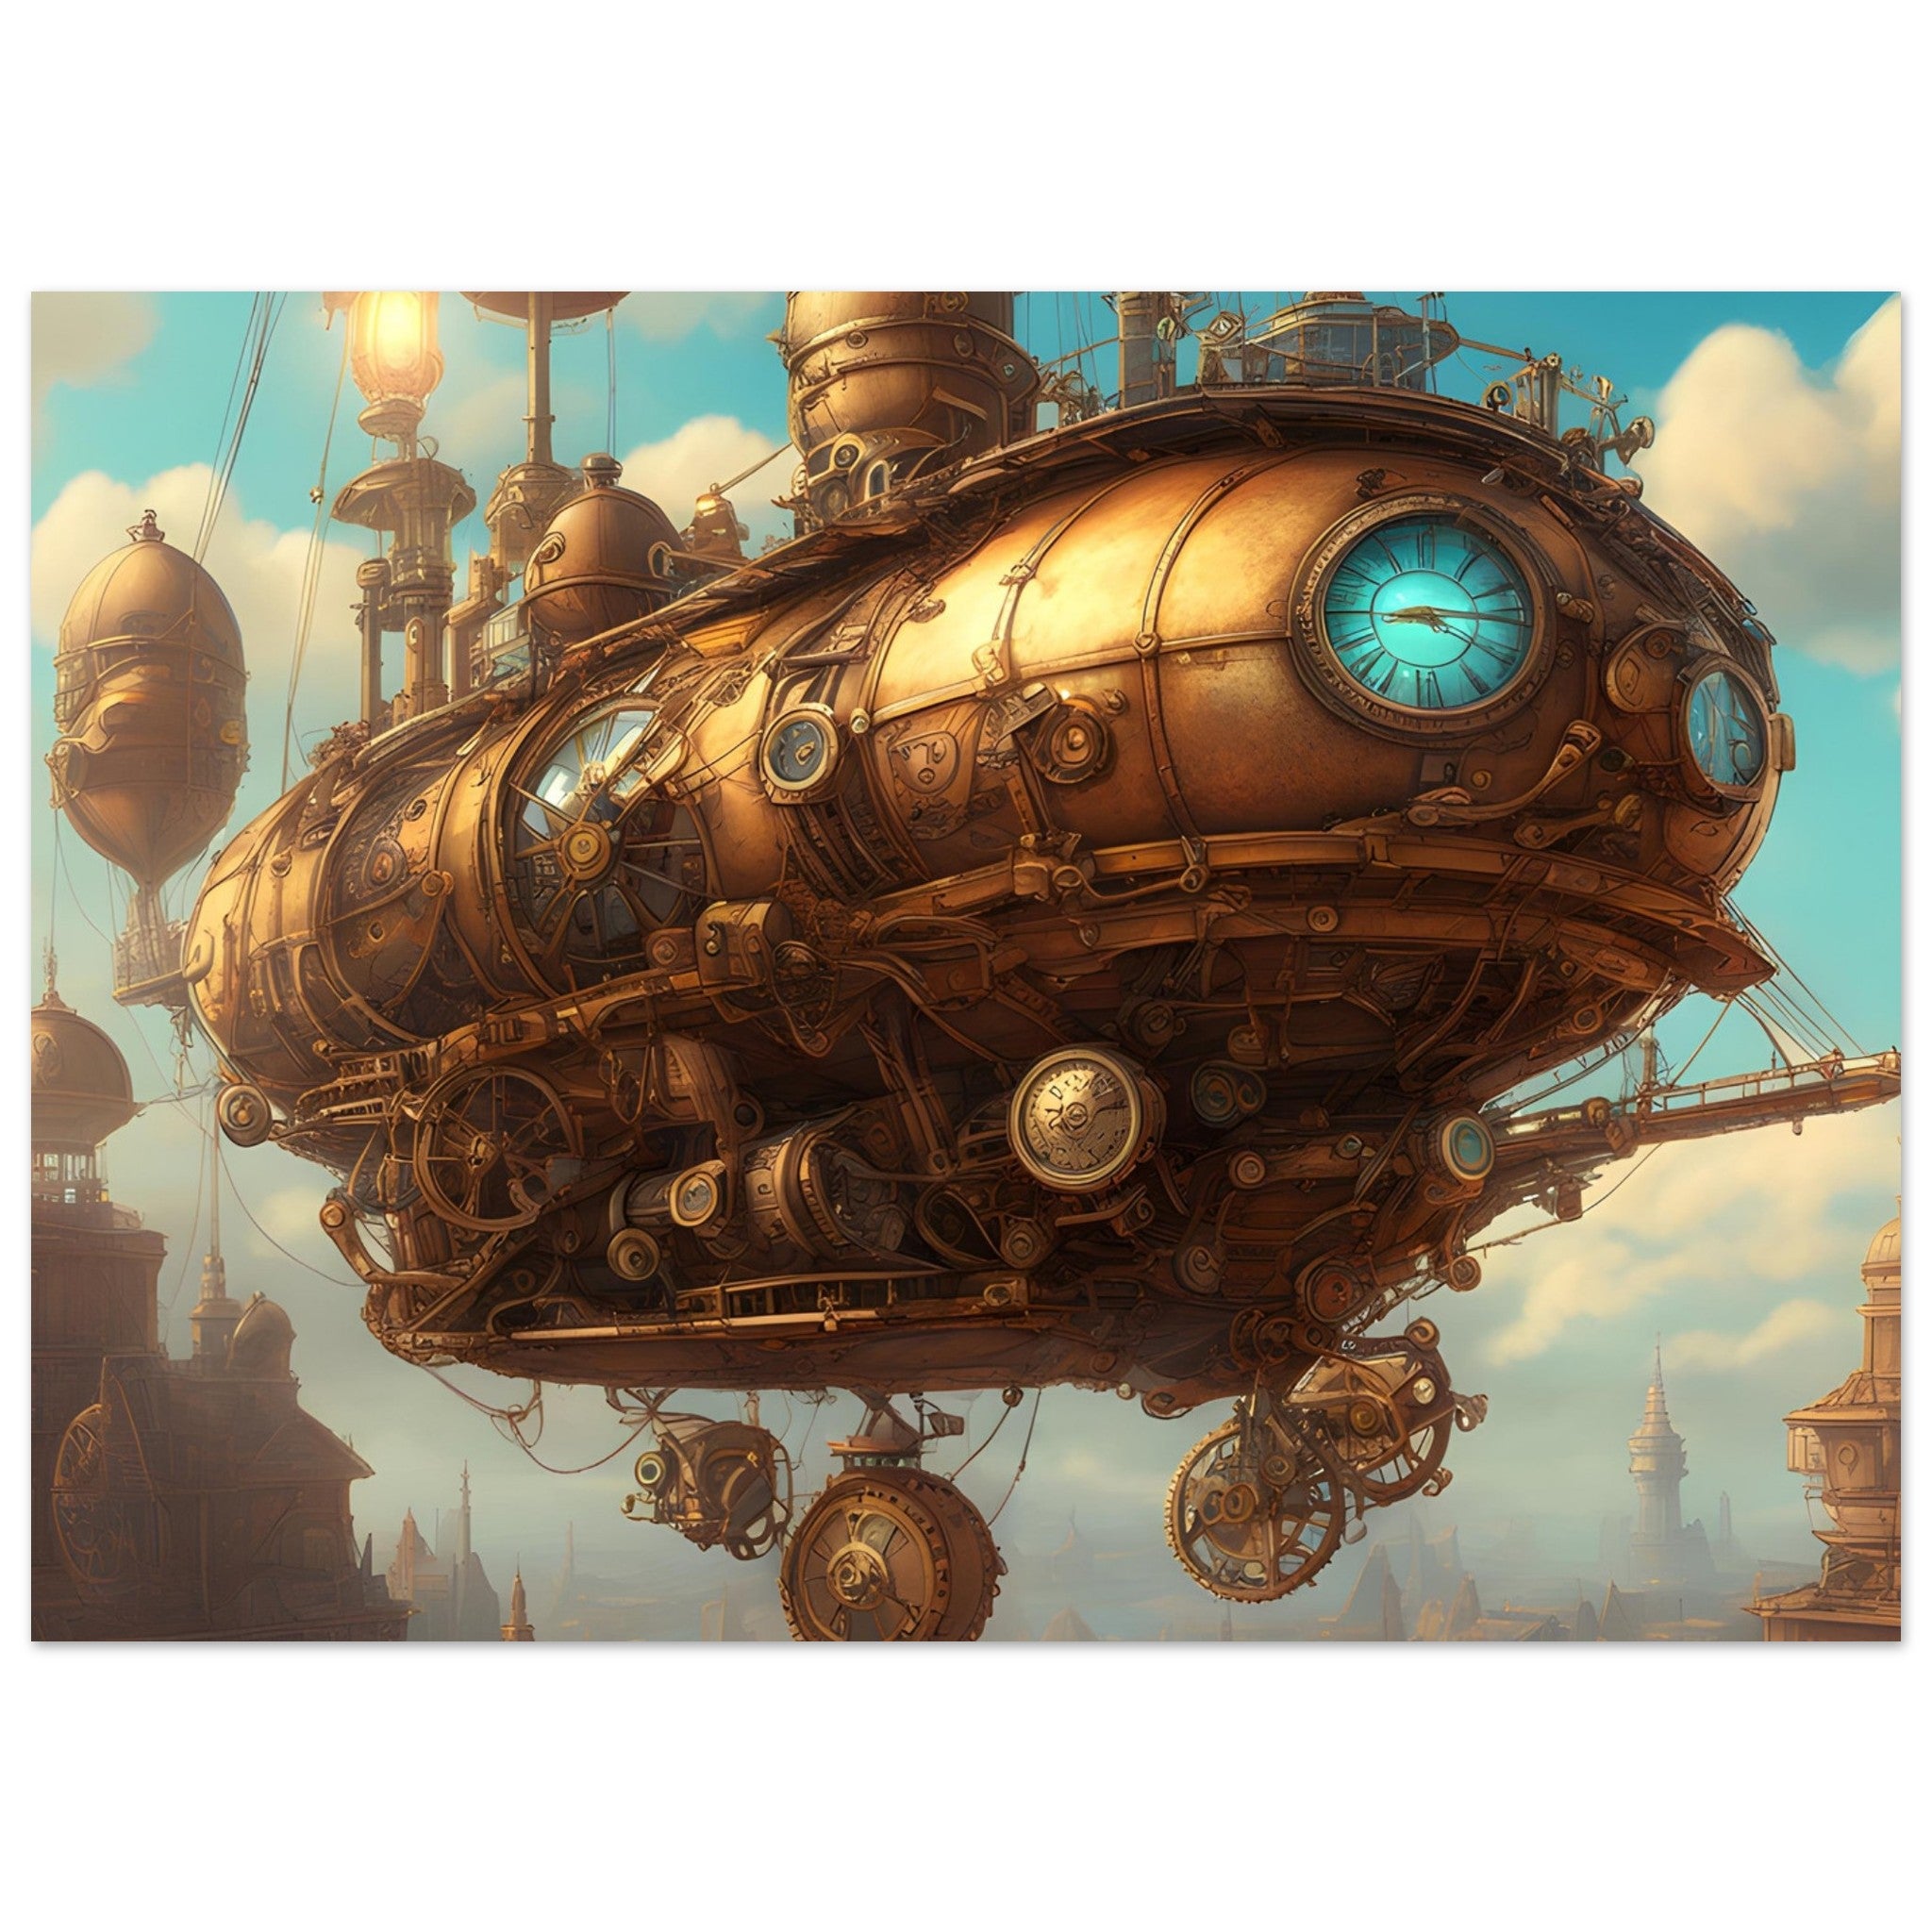 Steampunk Art - The Airship Zephyr Maiden